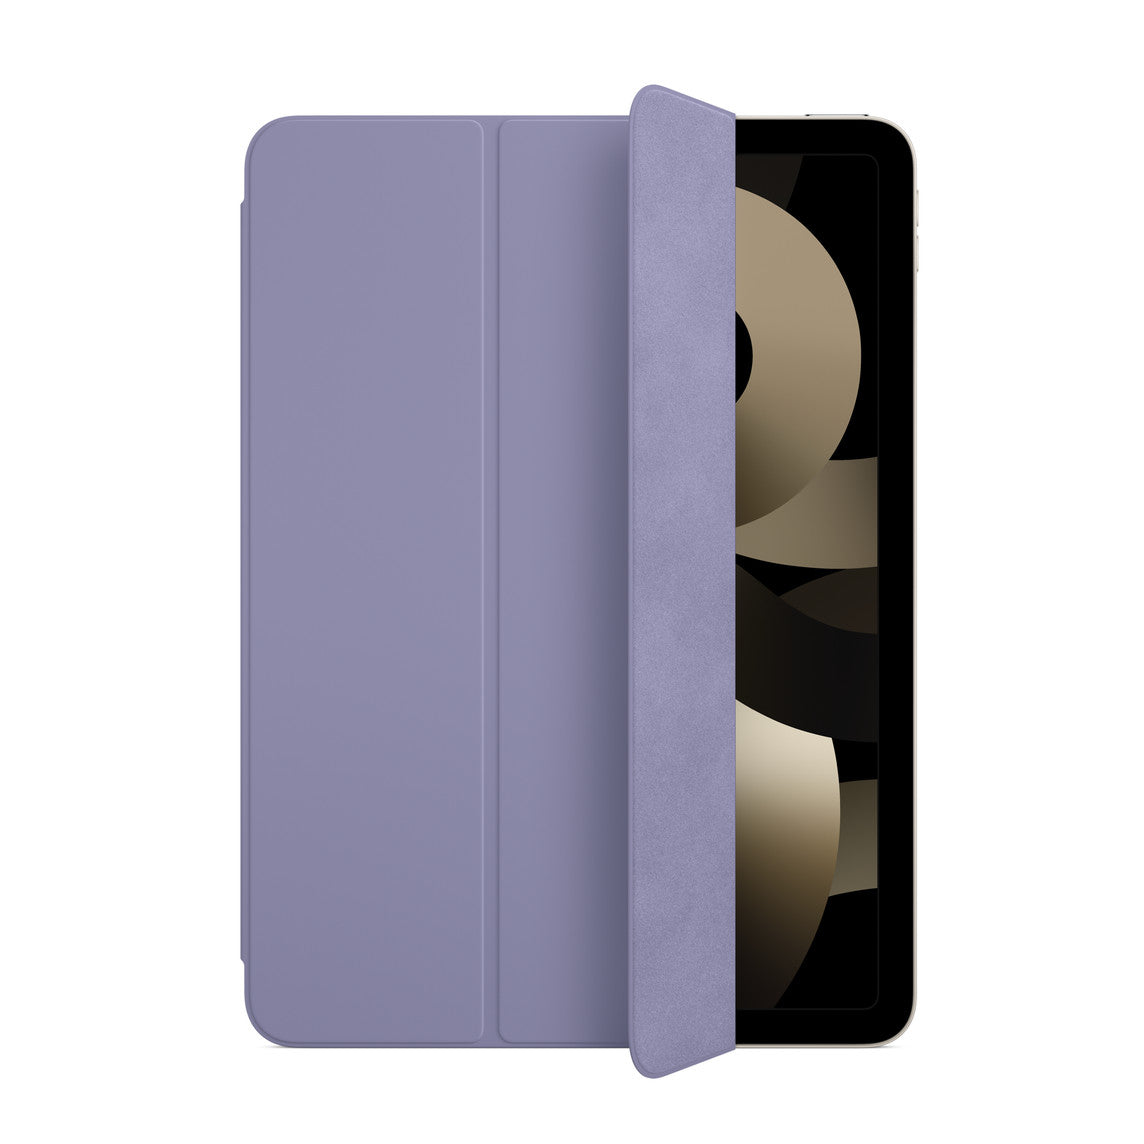 Smart Folio Case for iPad